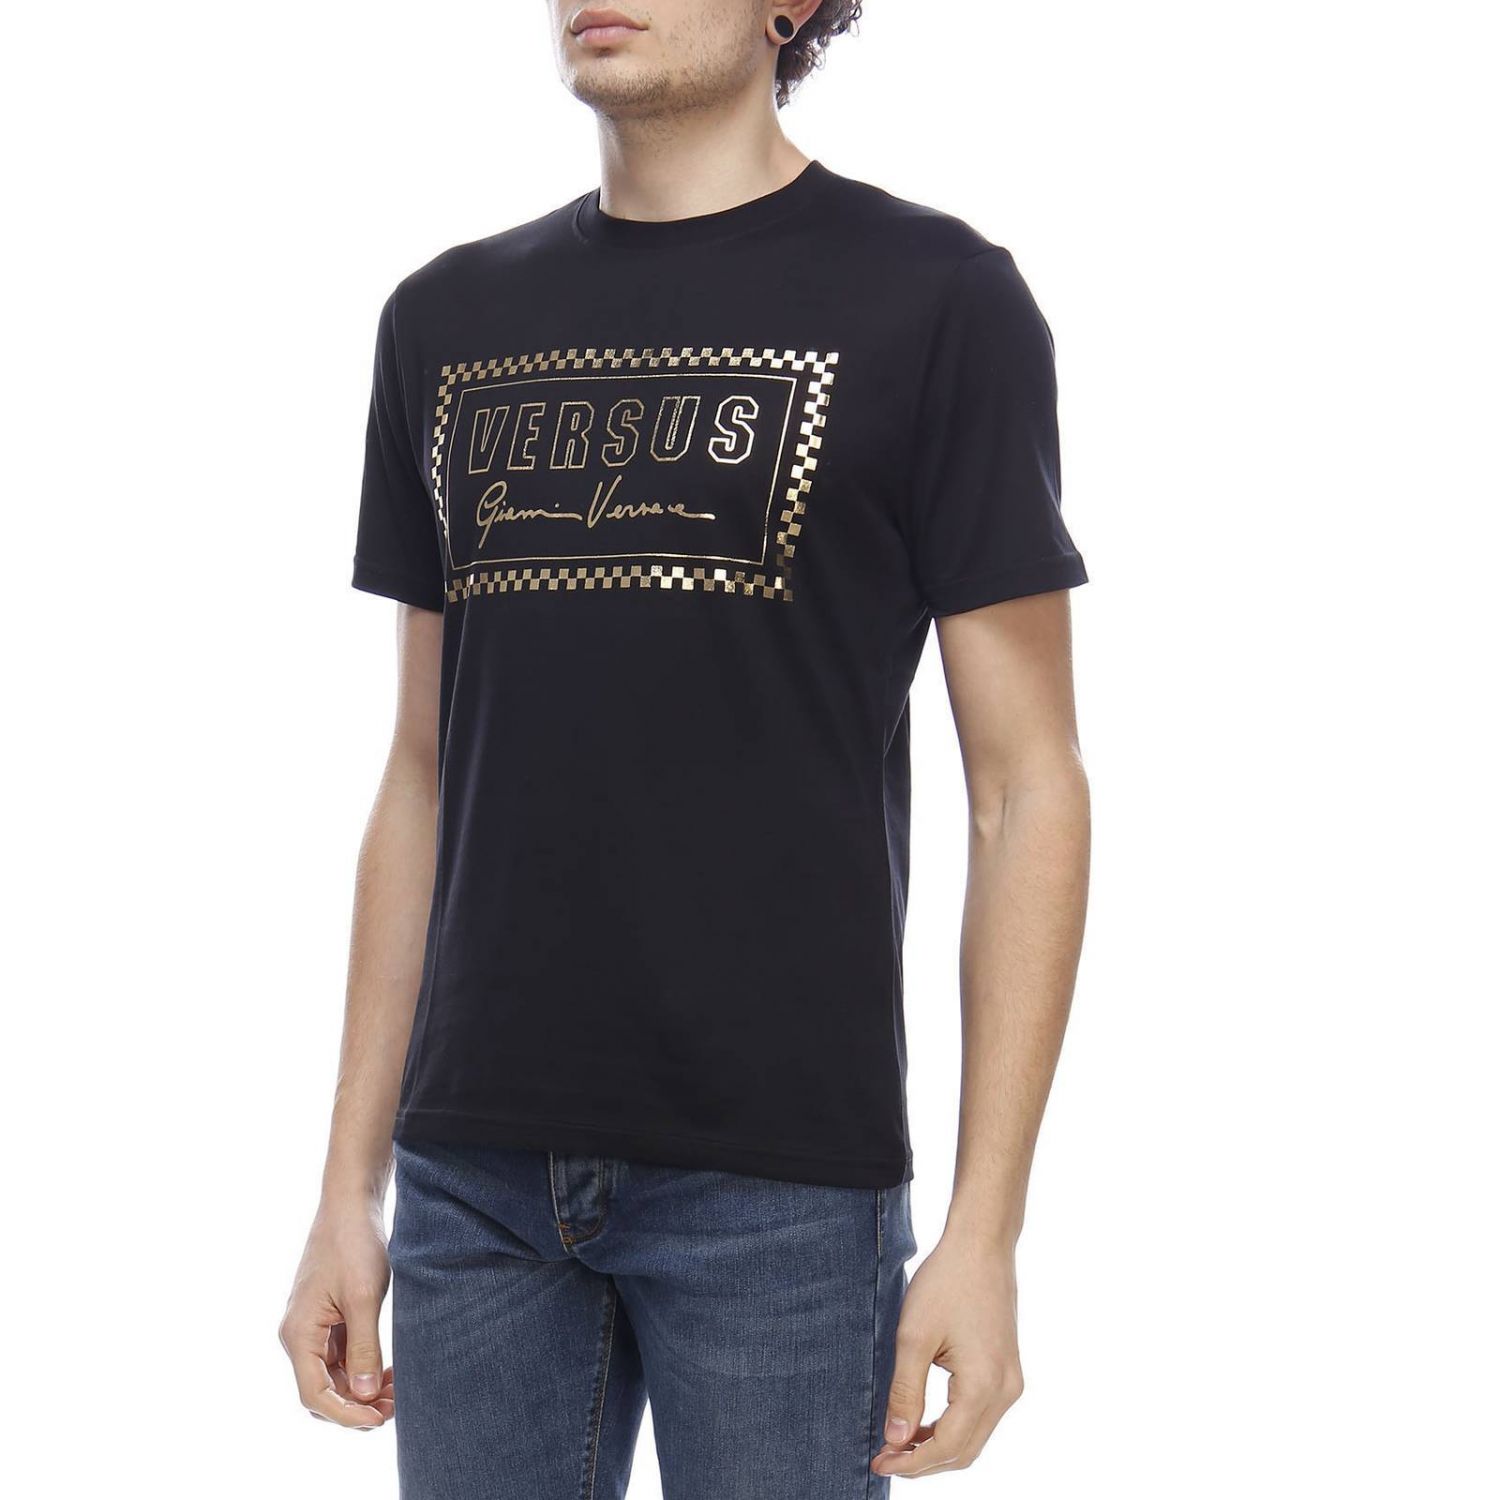 Versus Outlet: t-shirt for men - Black | Versus t-shirt BU90713 BJ10388 ...